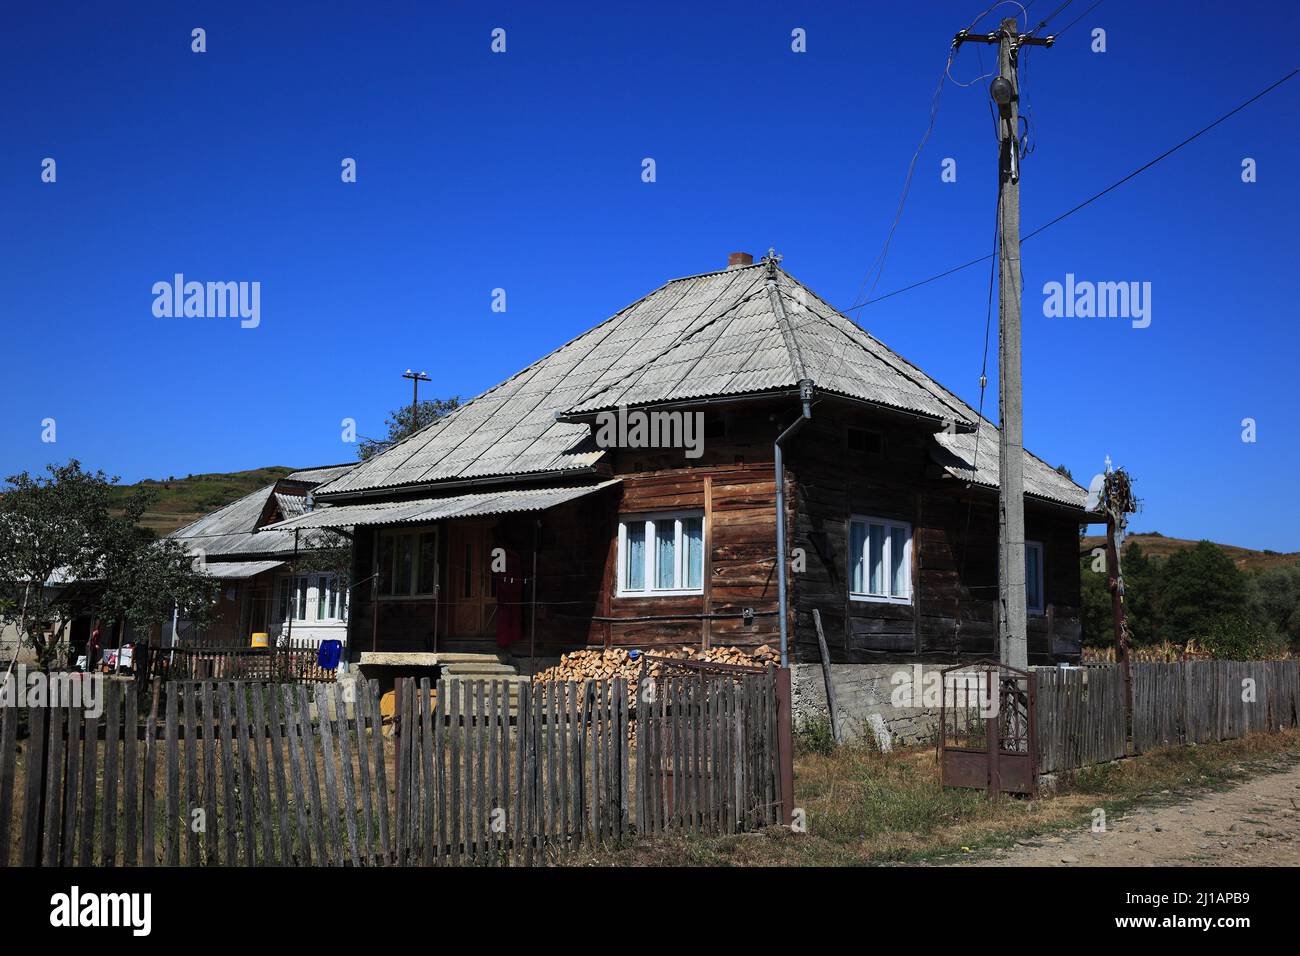 Bauernhaus in Holzbauweise, nahe Rogoz, Maramures, Rumänien  /  Wooden farmhouse, near Rogoz, Maramures, Romania (Aufnahmedatum kann abweichen) Stock Photo